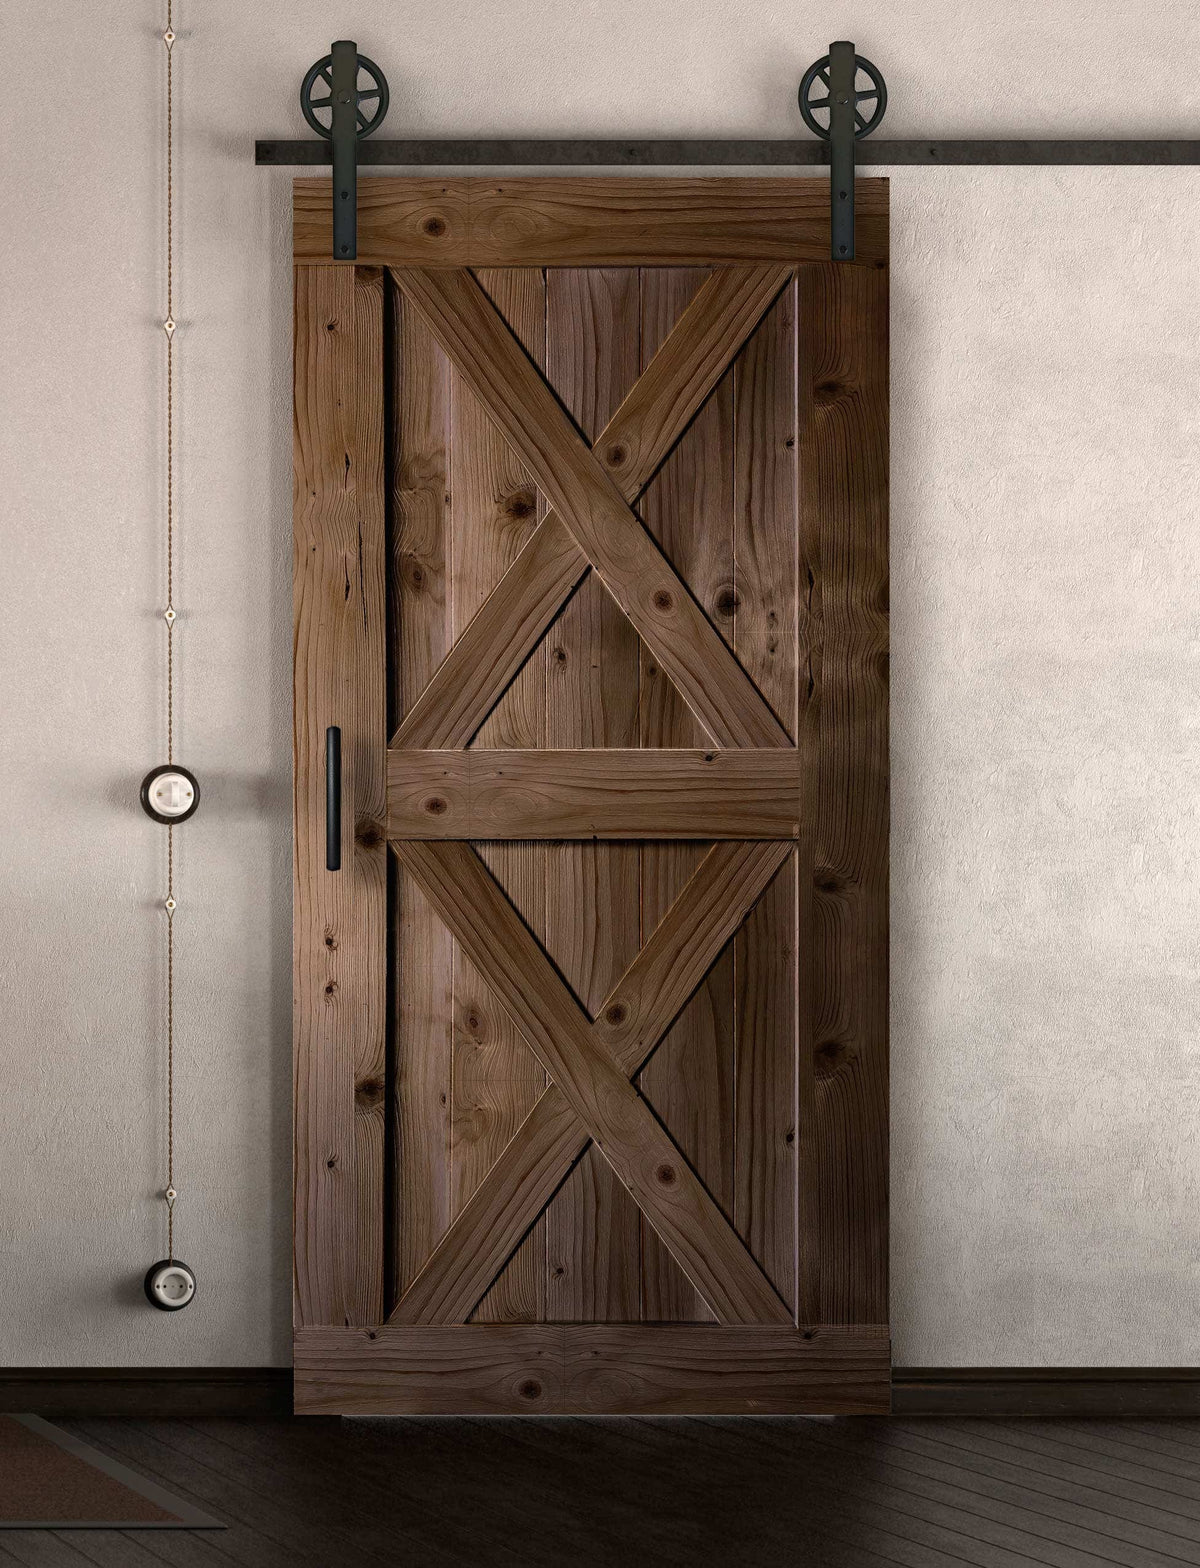 Schiebetür in Scheunentor-Optik Modell Double X - Farmhouse Barn Door rustikal